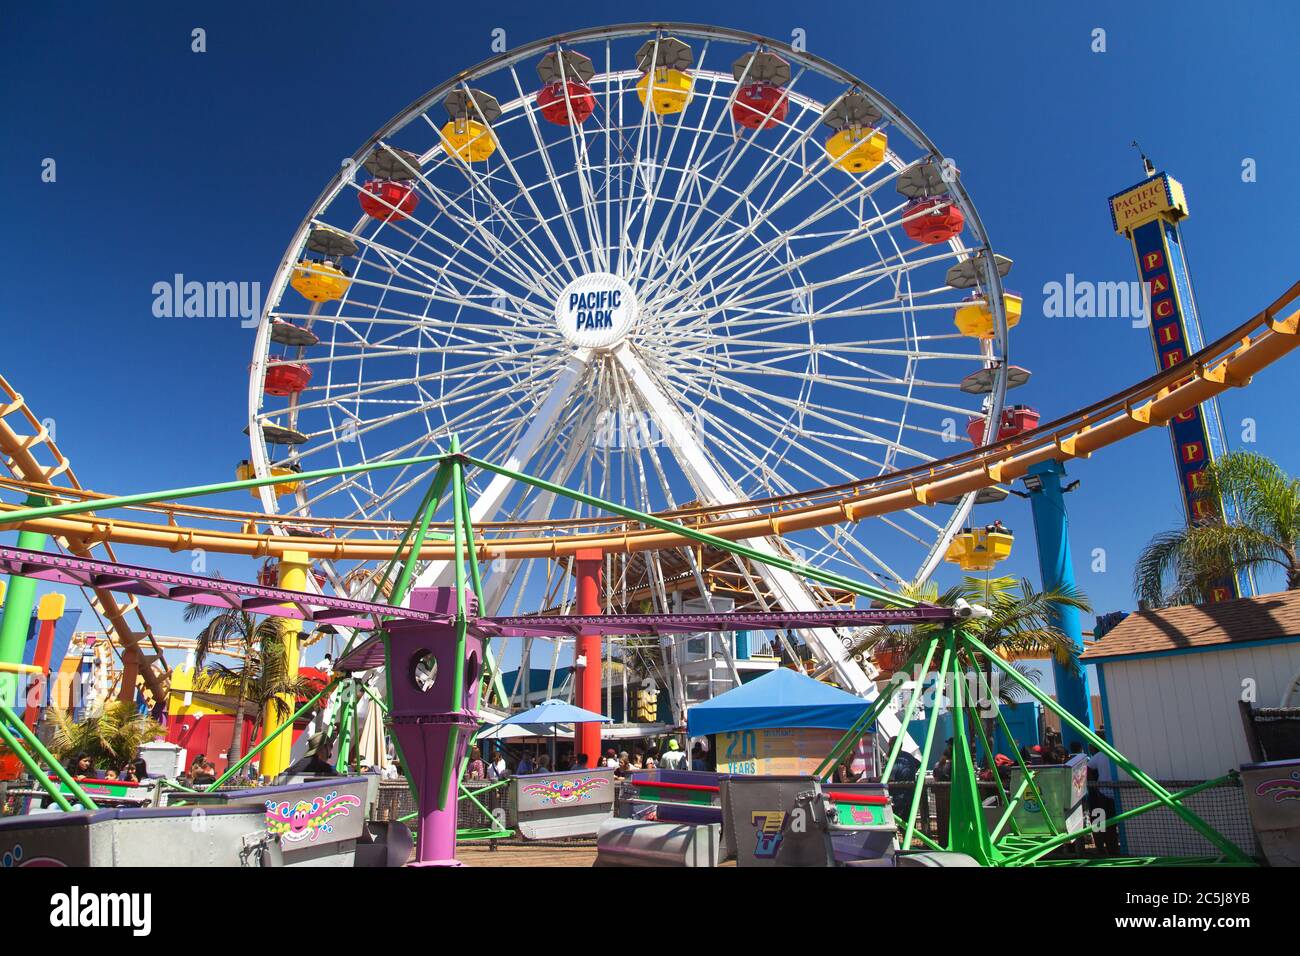 Las Angeles, California - September 9, 2019: Pacific Park Ferris Wheel in Santa Monica, Los Angeles, United States. Stock Photo